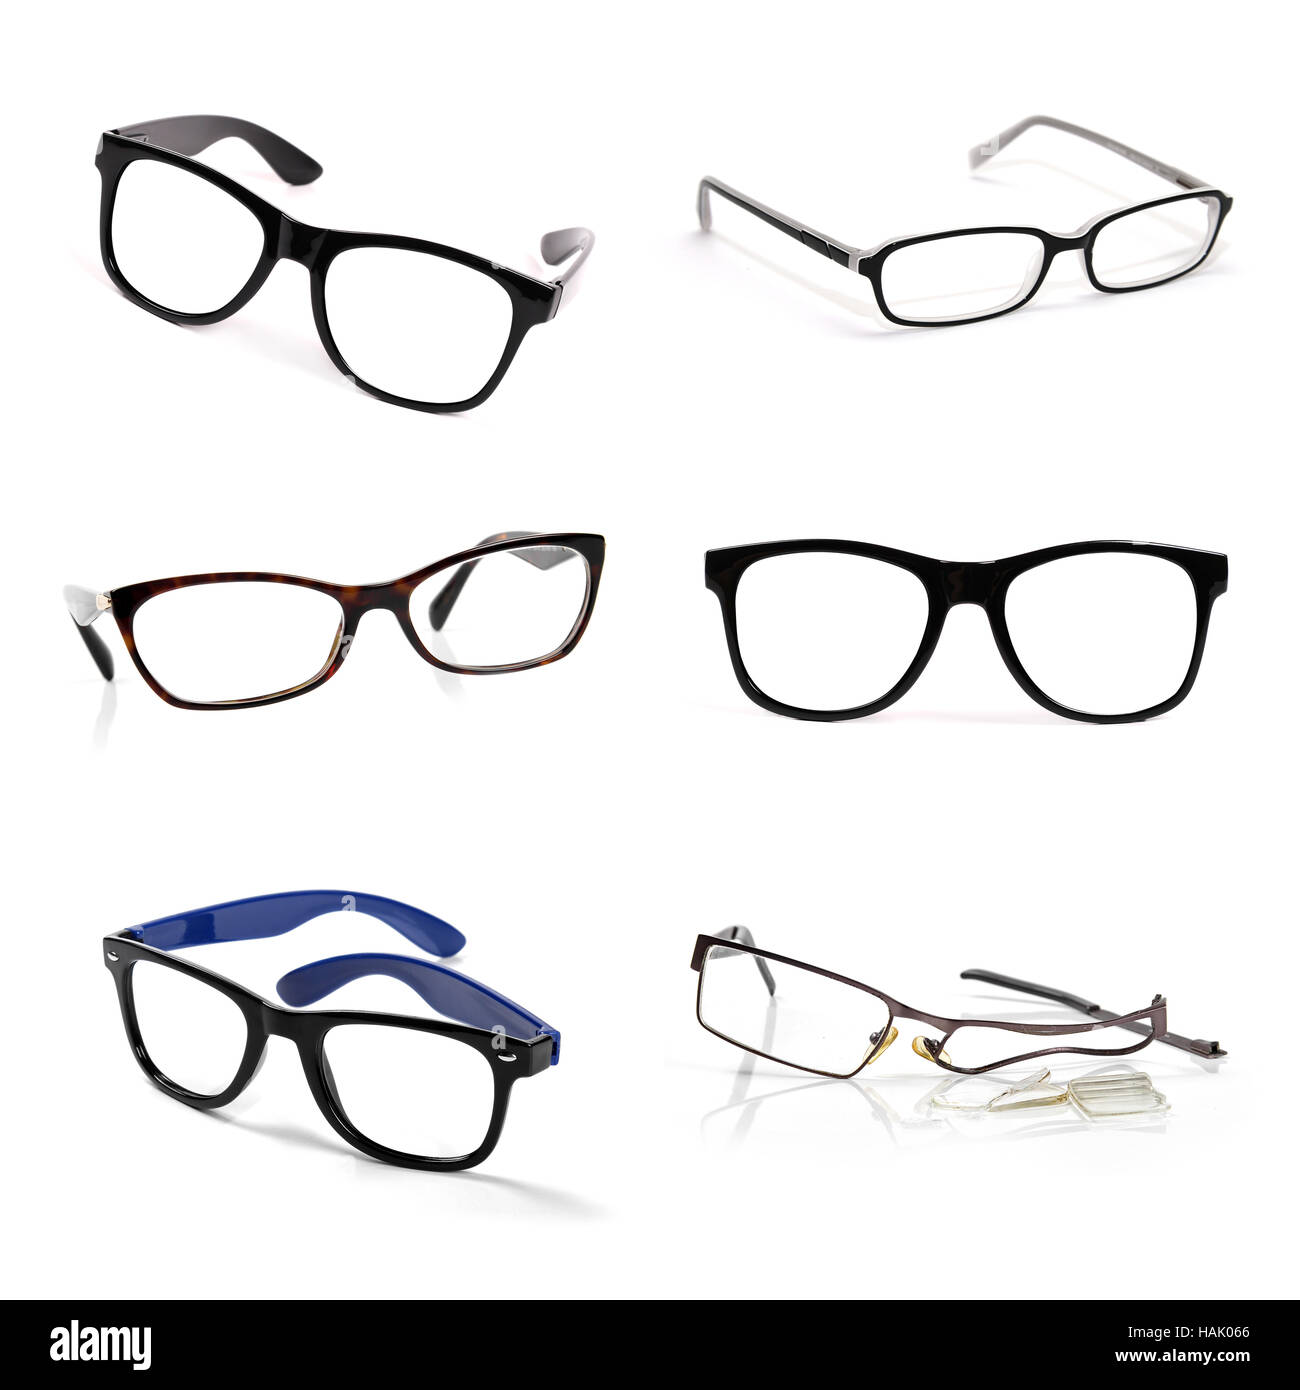 eyeglasses collection isolated on white background Stock Photo